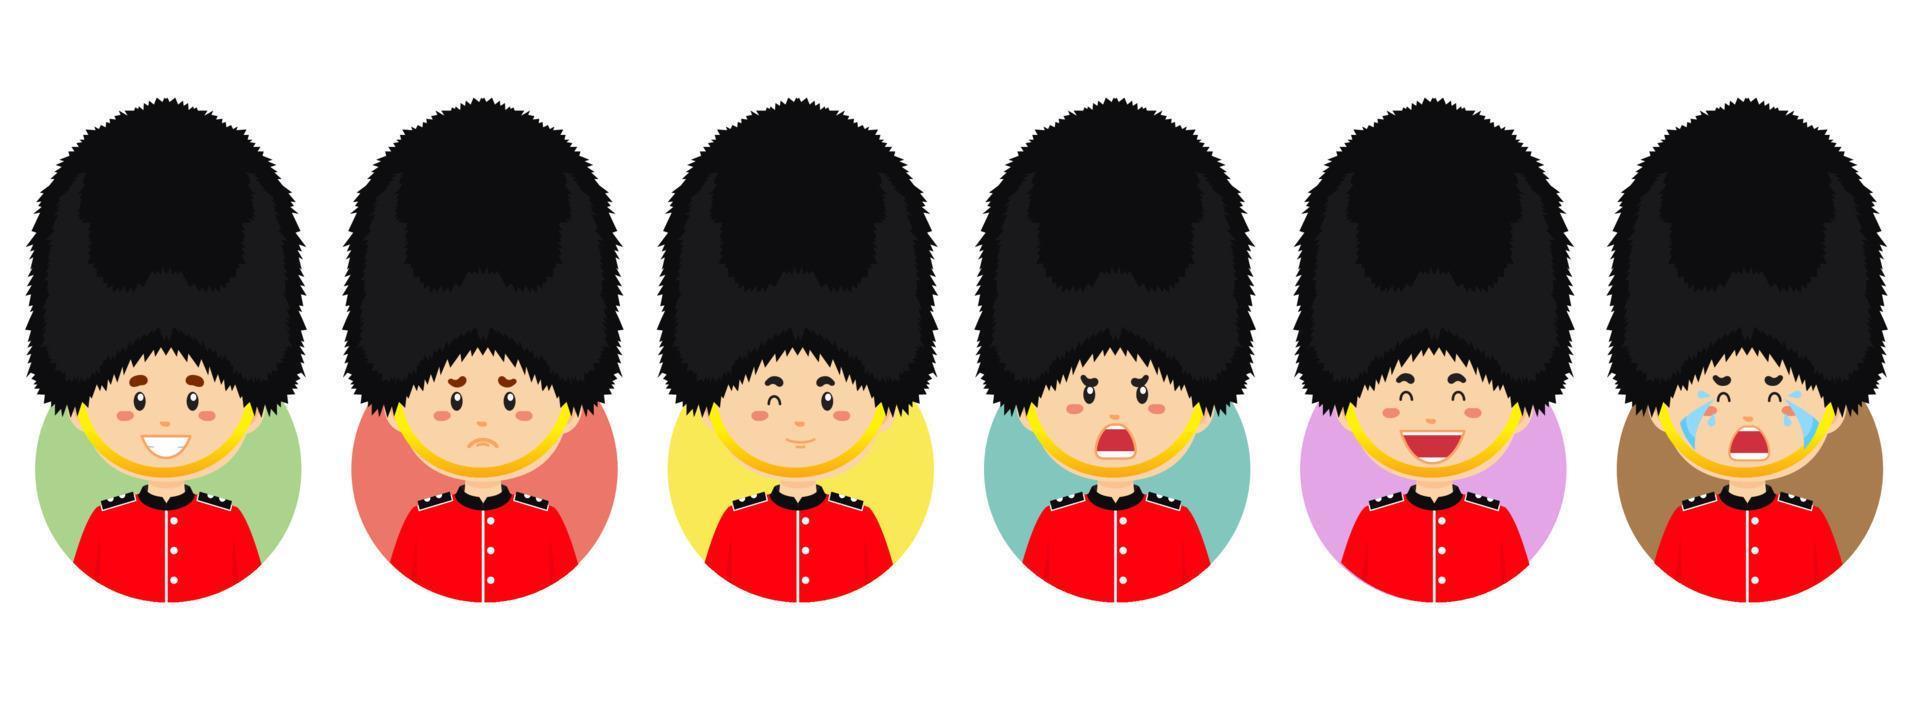 avatar britannico con varie espressioni vettore